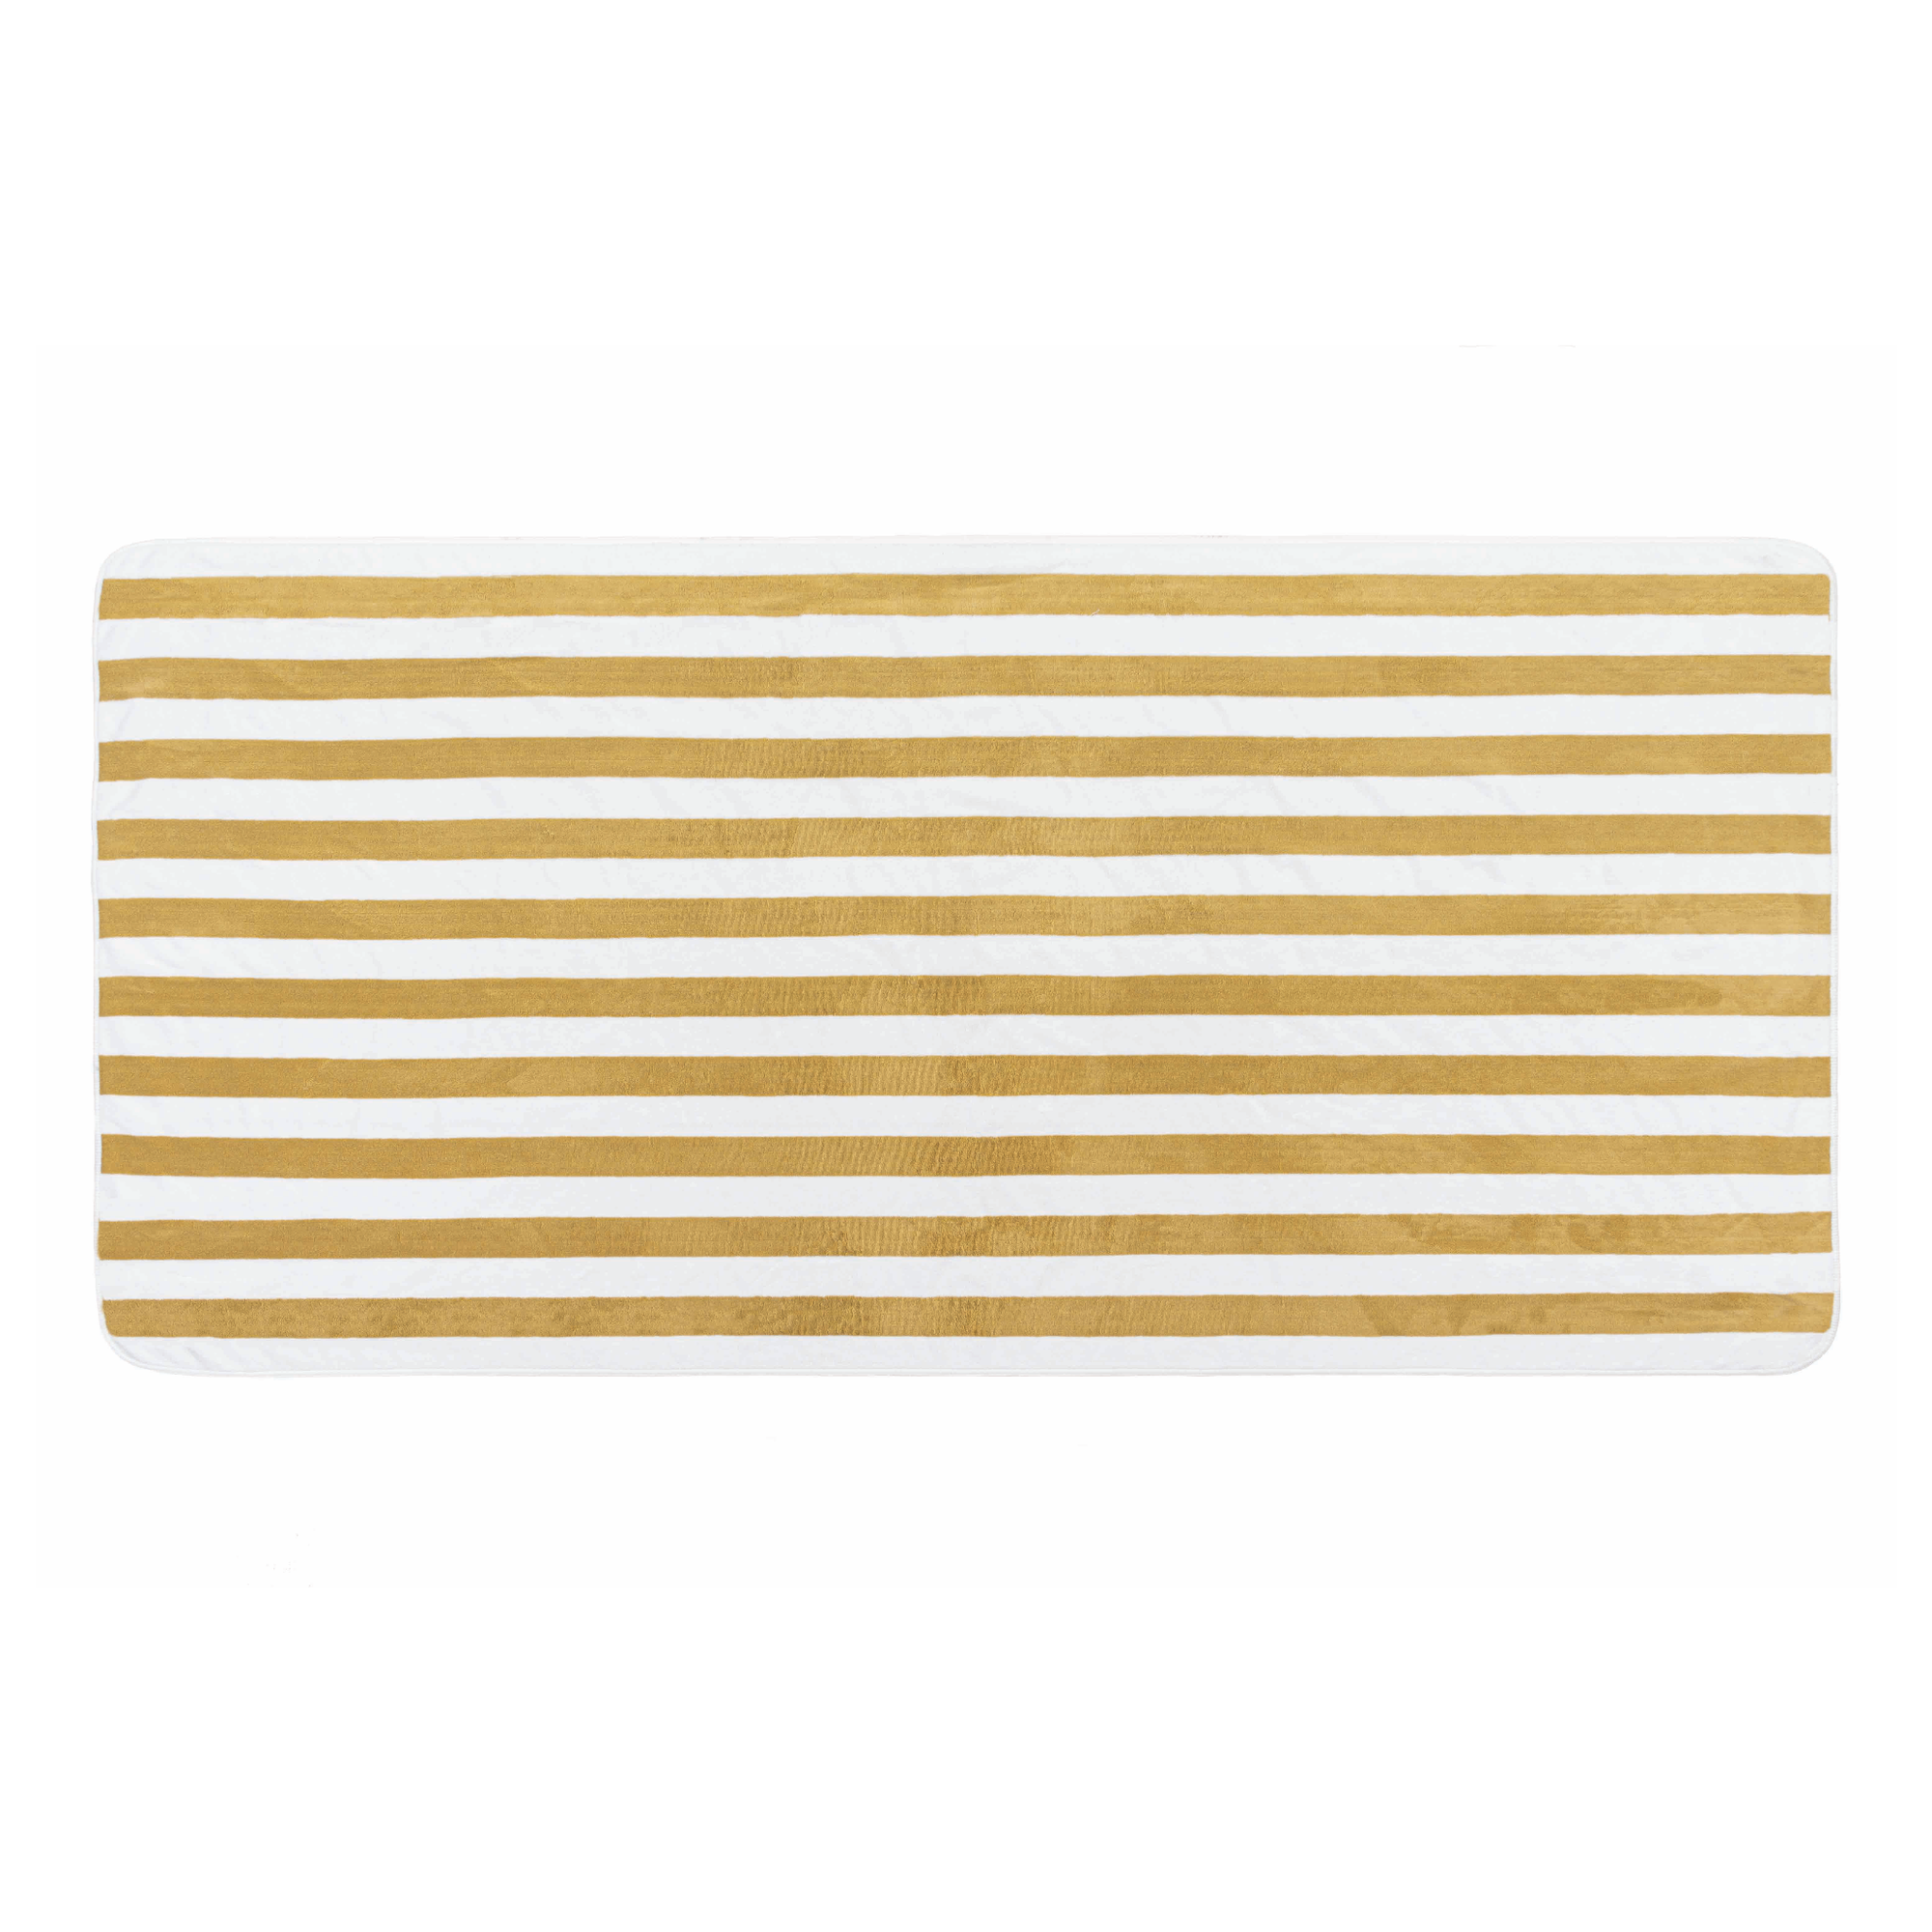 Top View of Graccioza Aveiro Beach Towel in Gold Color